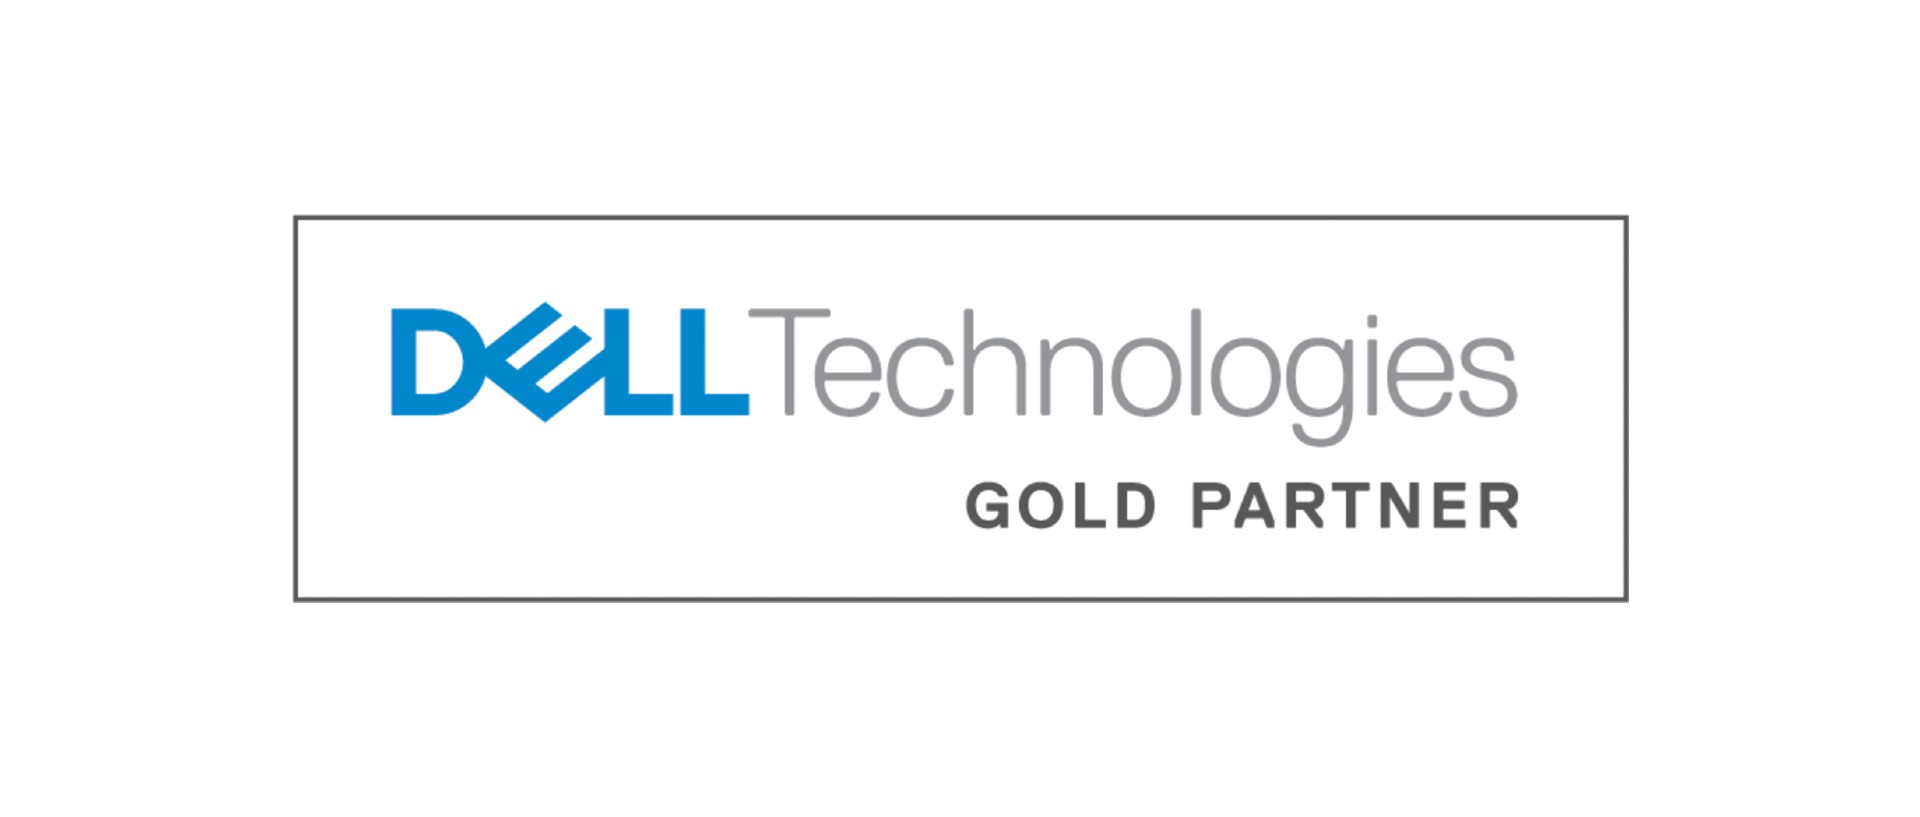 Dell Technologies Gold Partner Logo Horizontal Blue